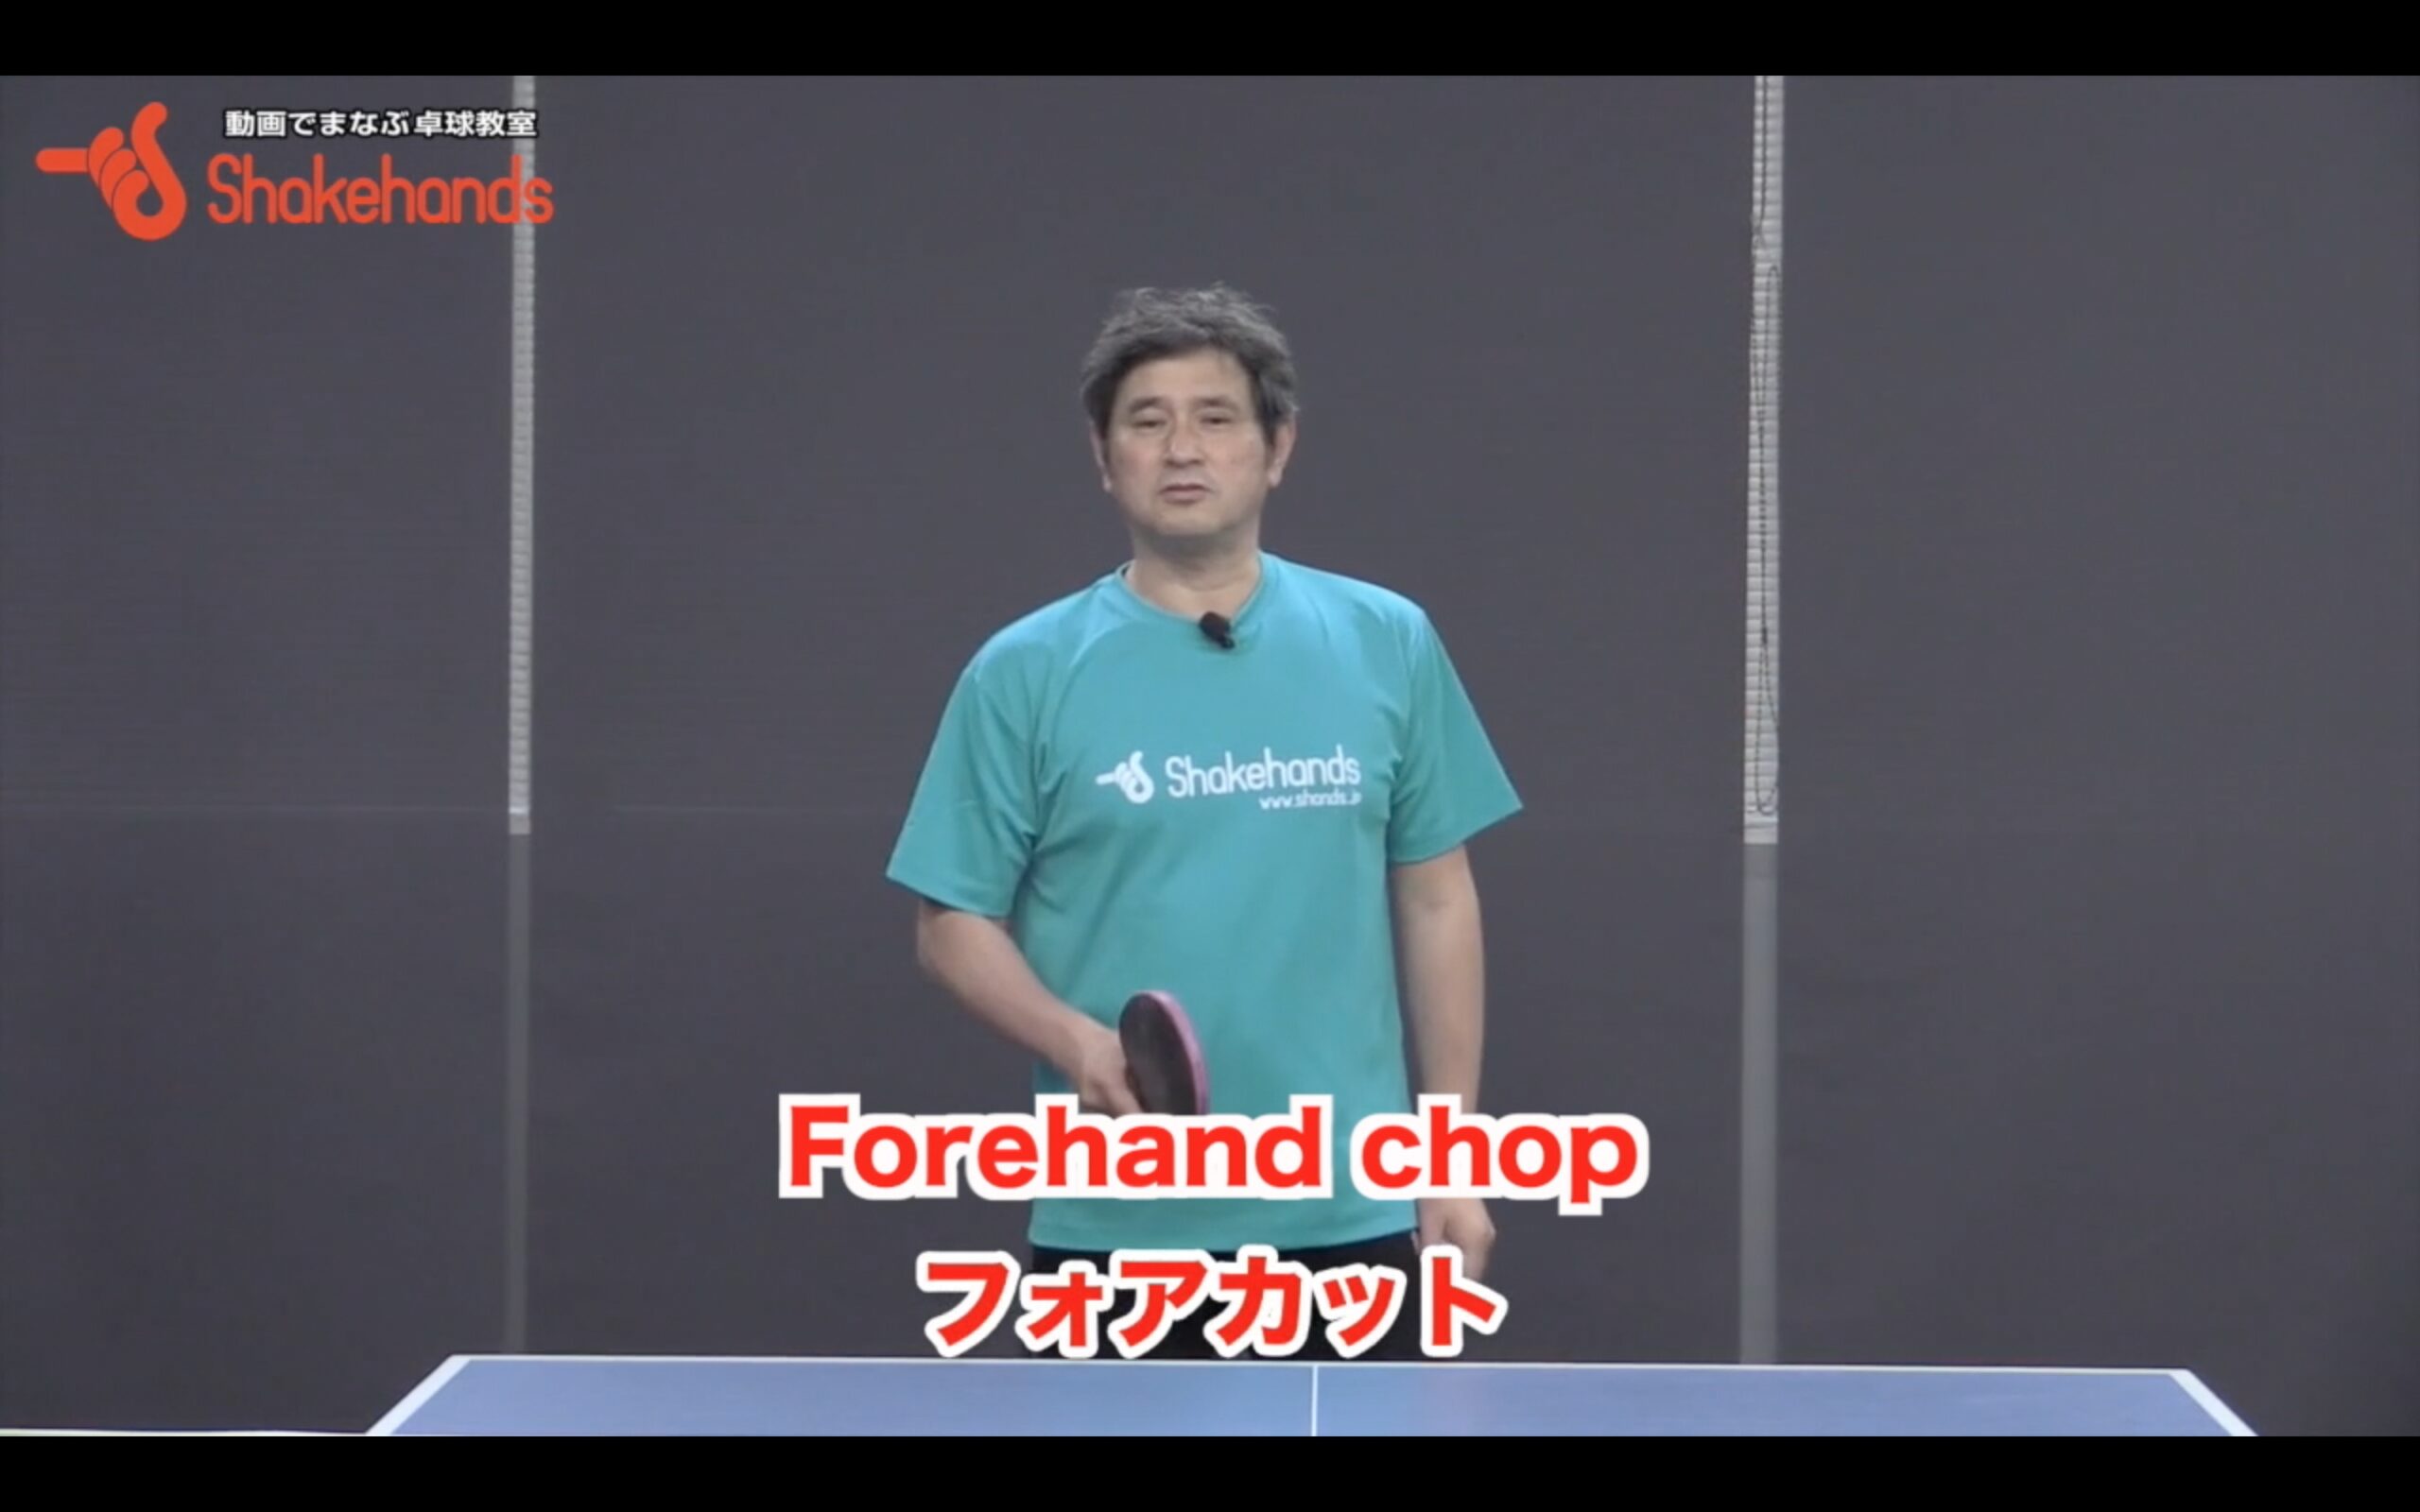 Forehand chop